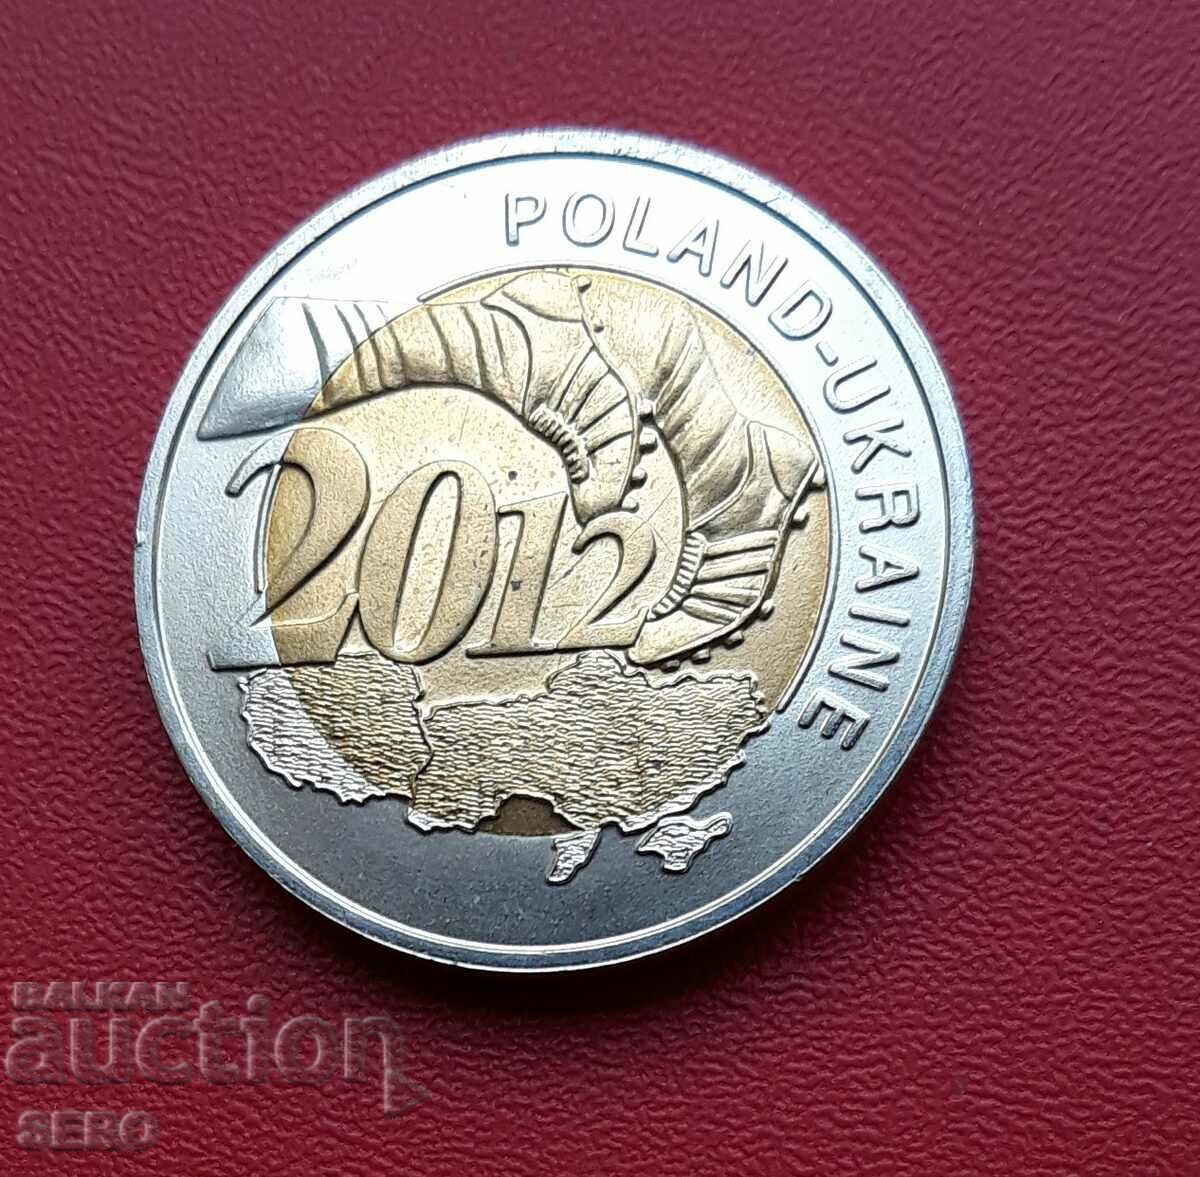 Polonia și Ucraina - fotbal european 2012